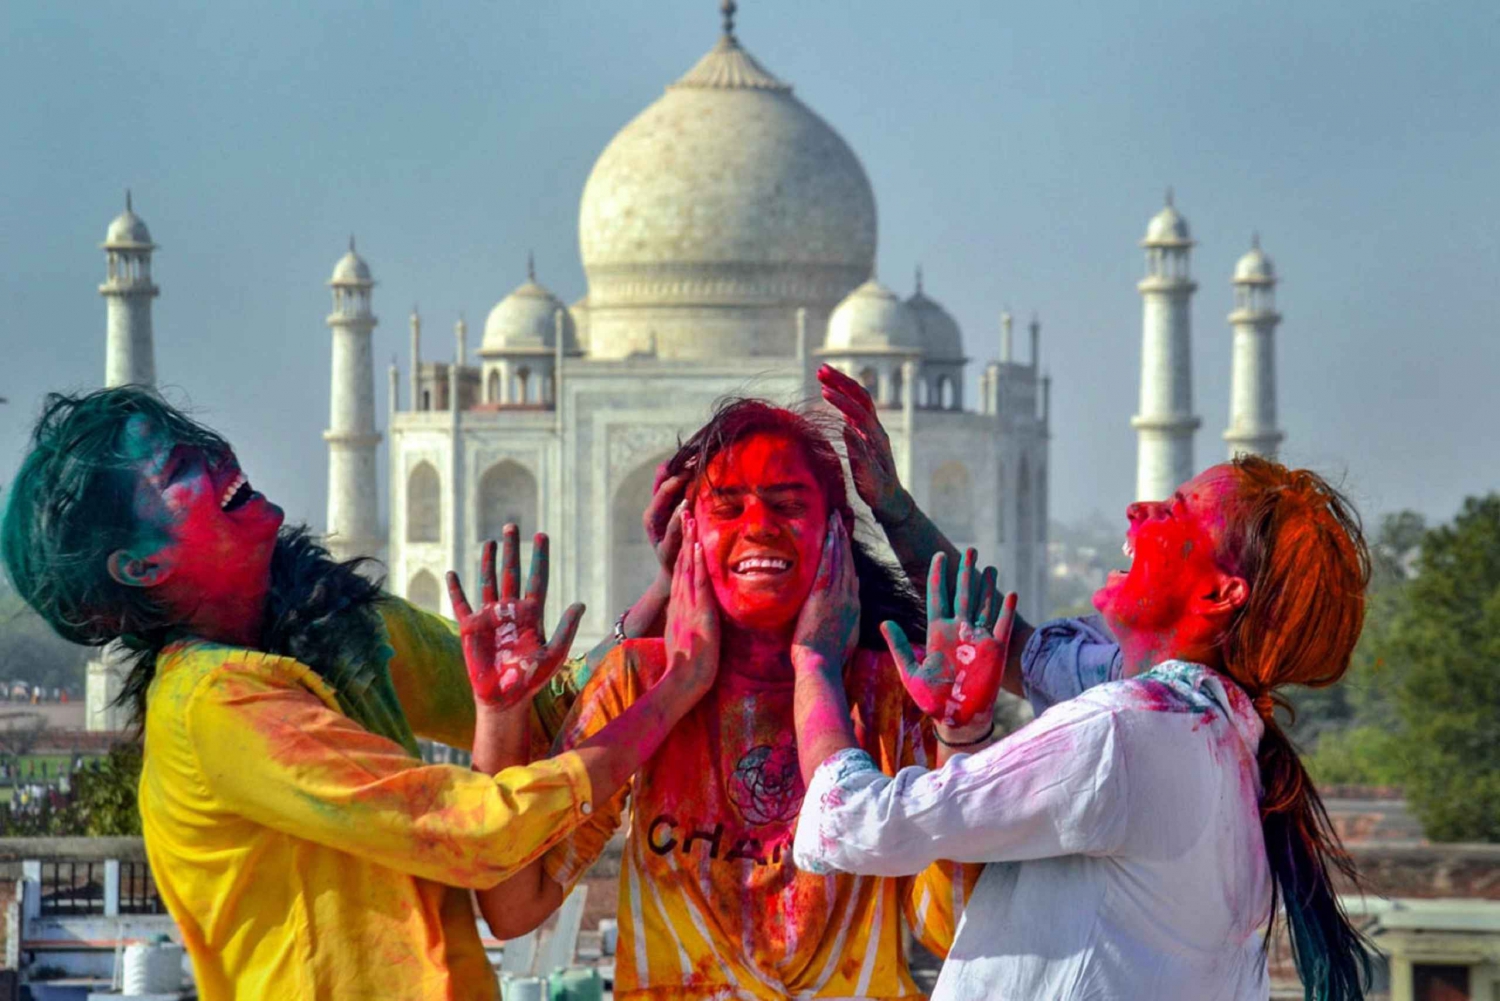 Enjoy Holi Festival Celebration with Colors, Music & Dance